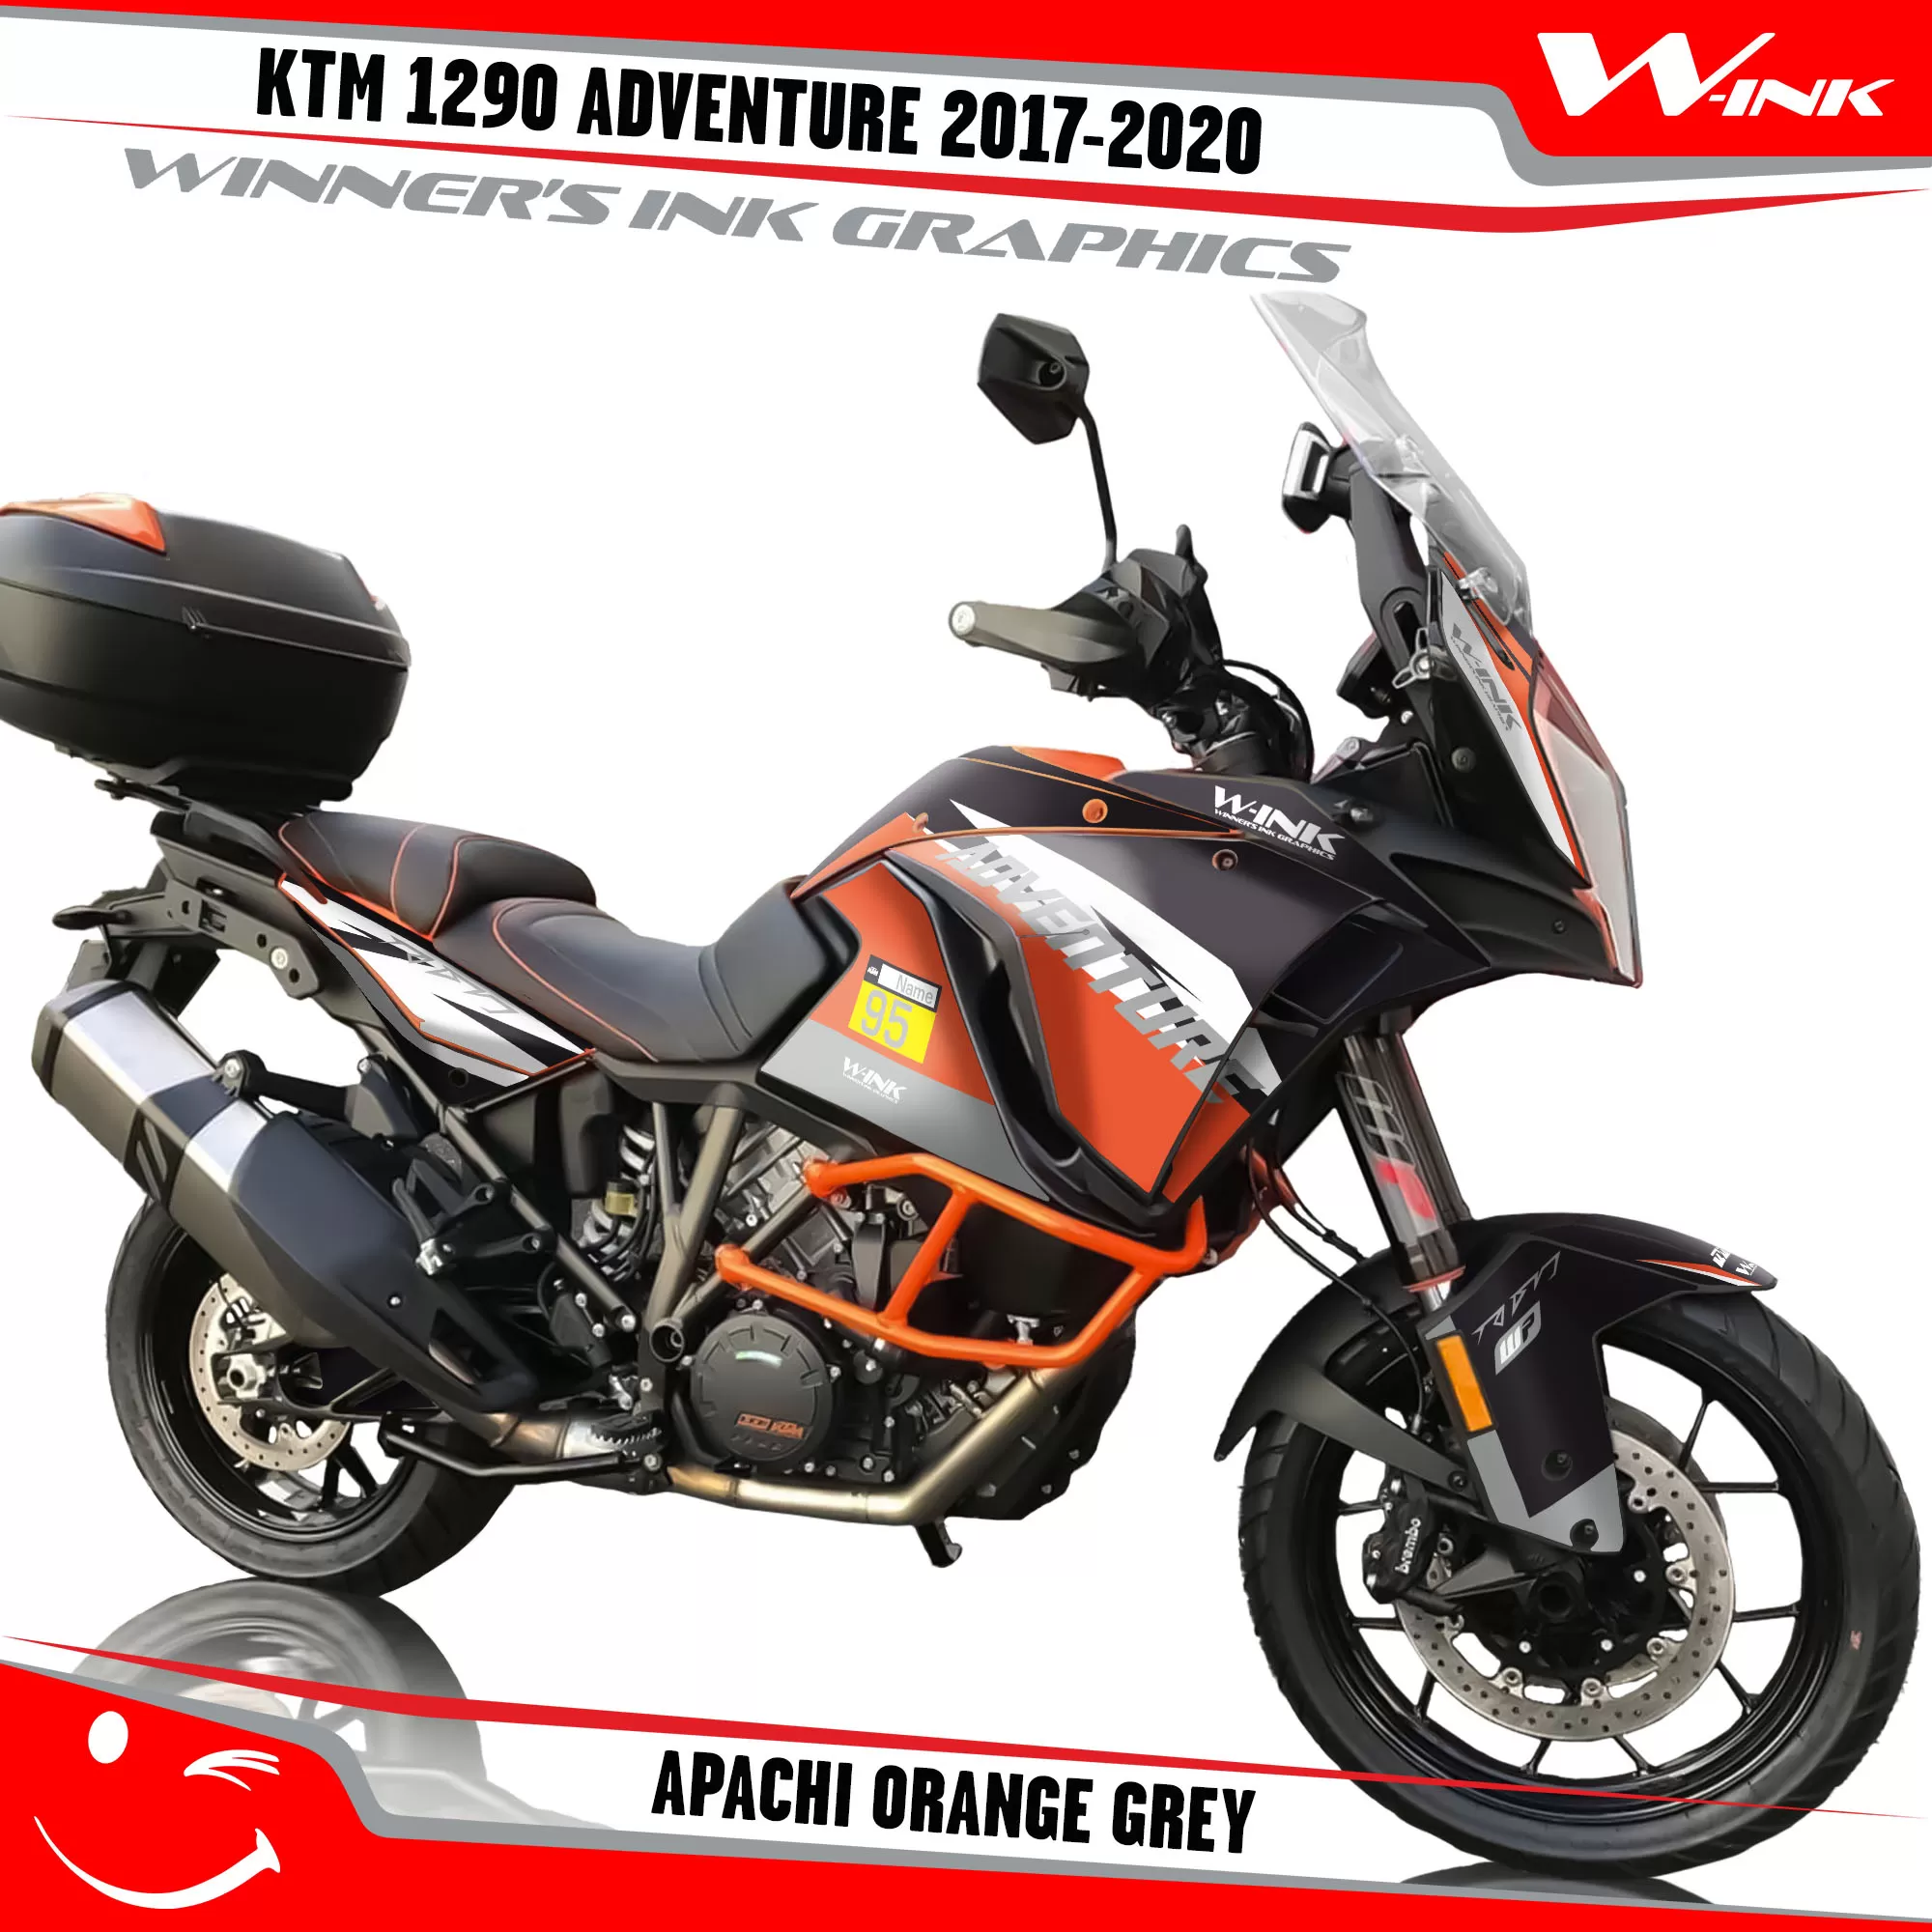 KTM-Adventure-1290-2017-2018-2019-2020-graphics-kit-and-decals-Apachi-Orange-Grey